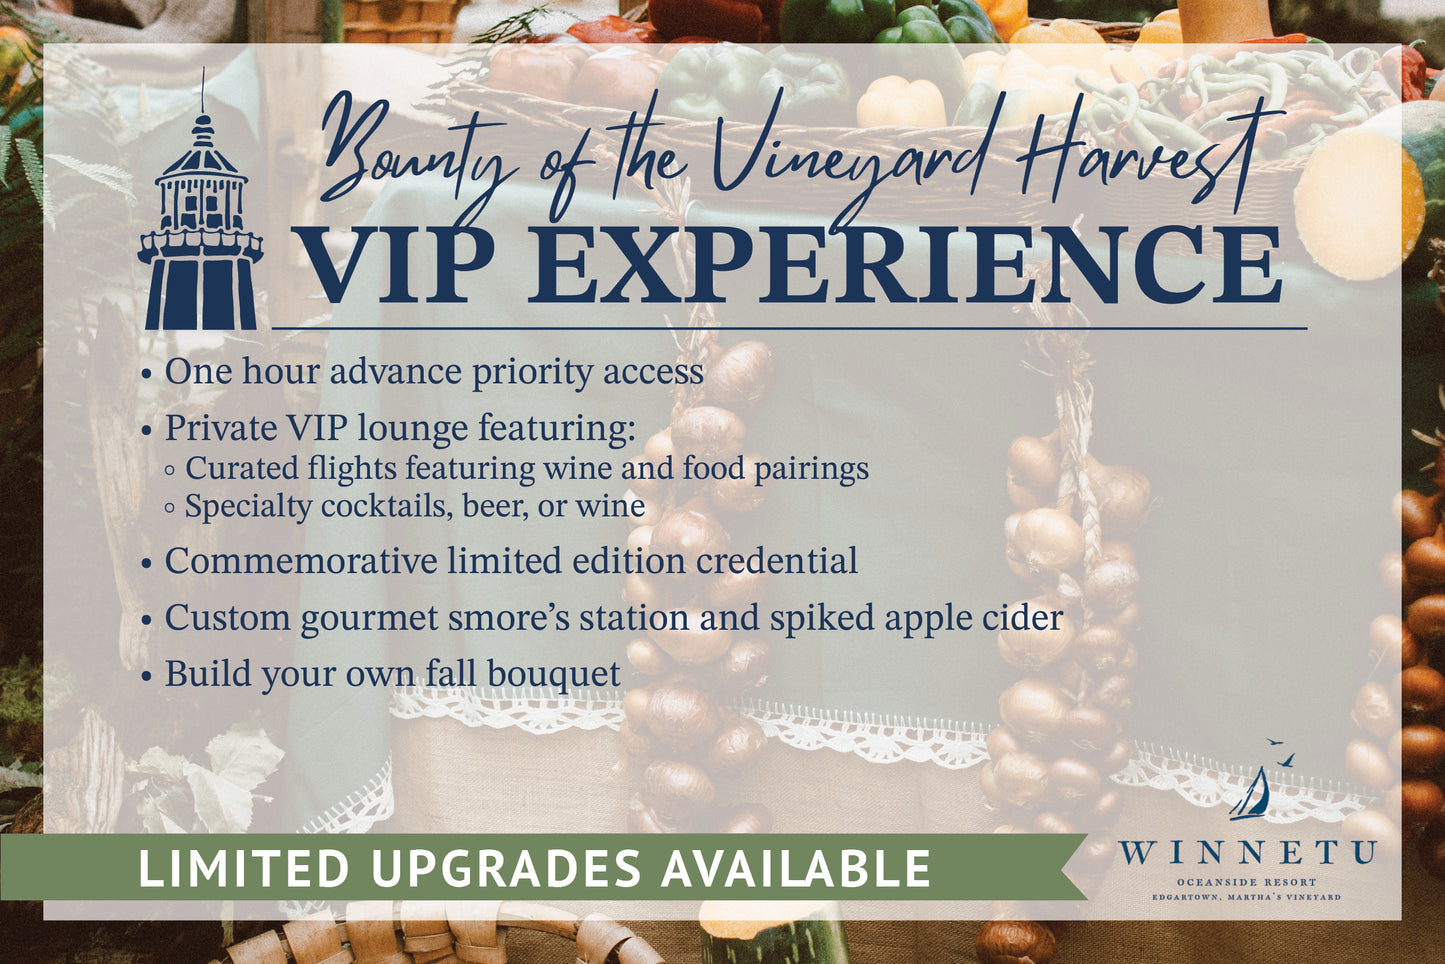 Bounty of the Vineyard Harvest VIP Experience